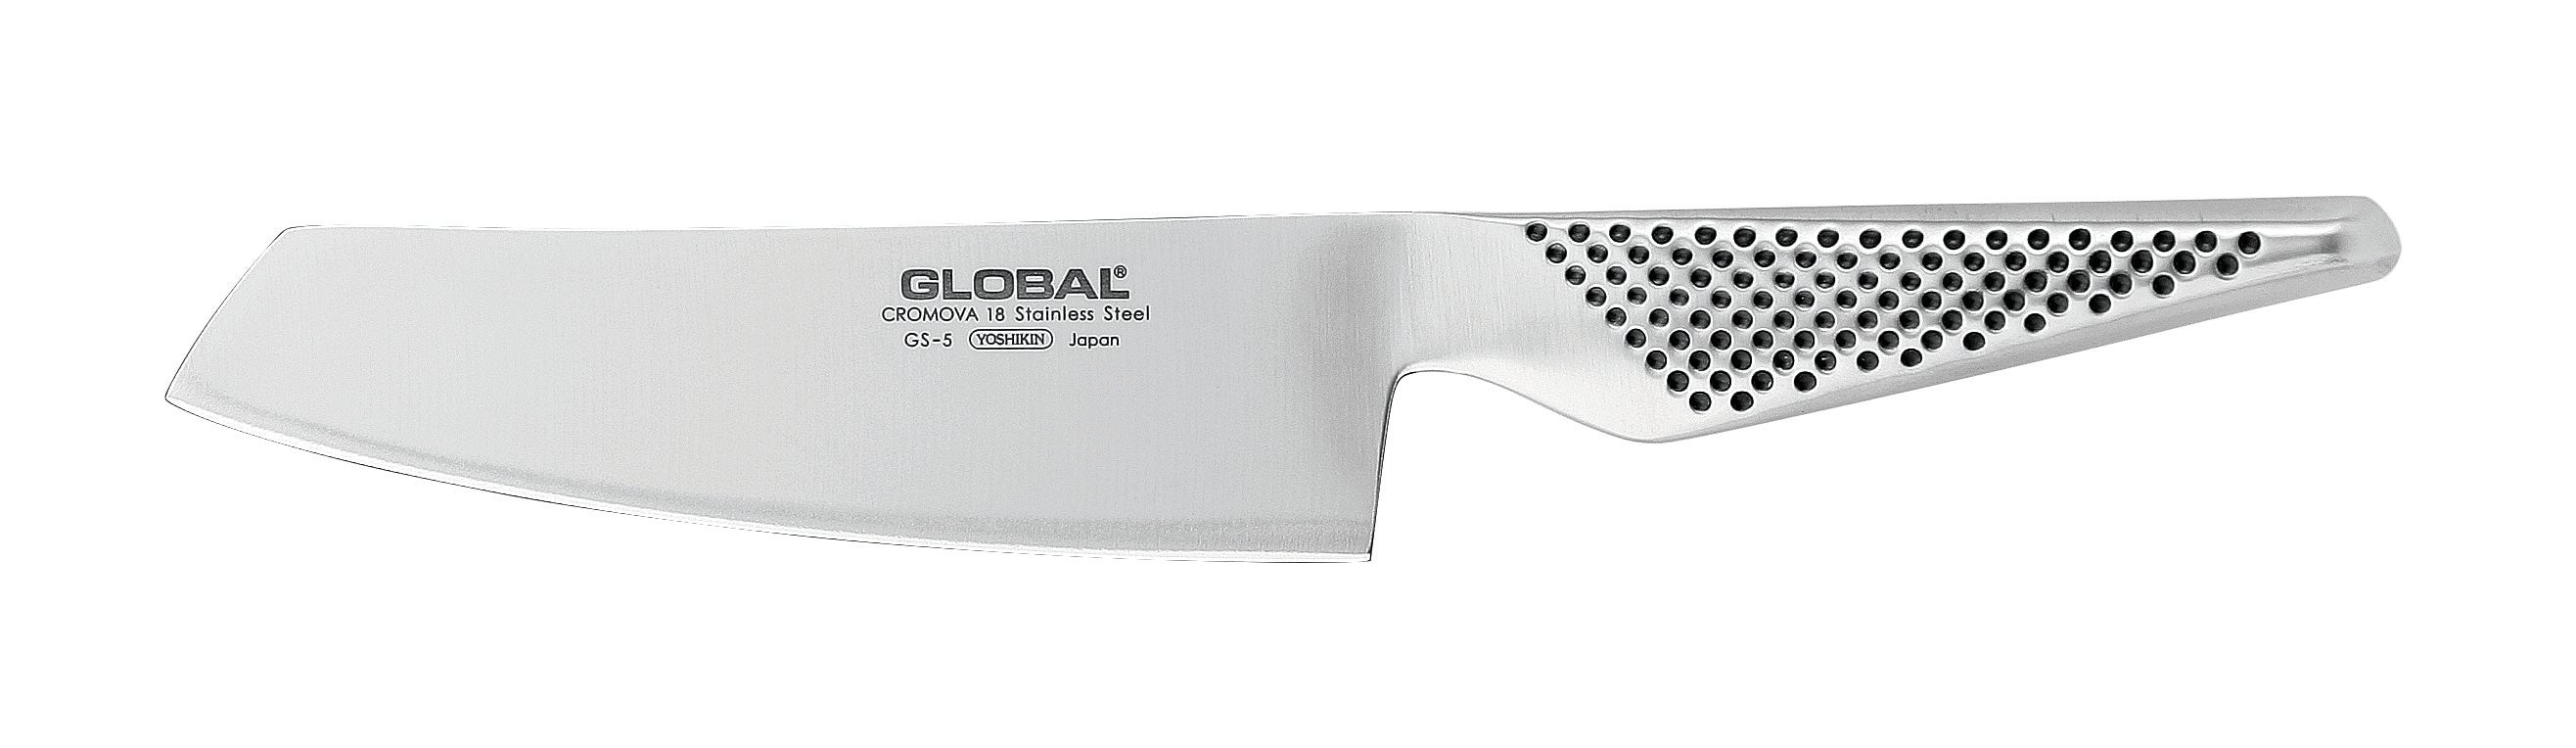 Global Classic GS-5 Vegetable Knife 14cm